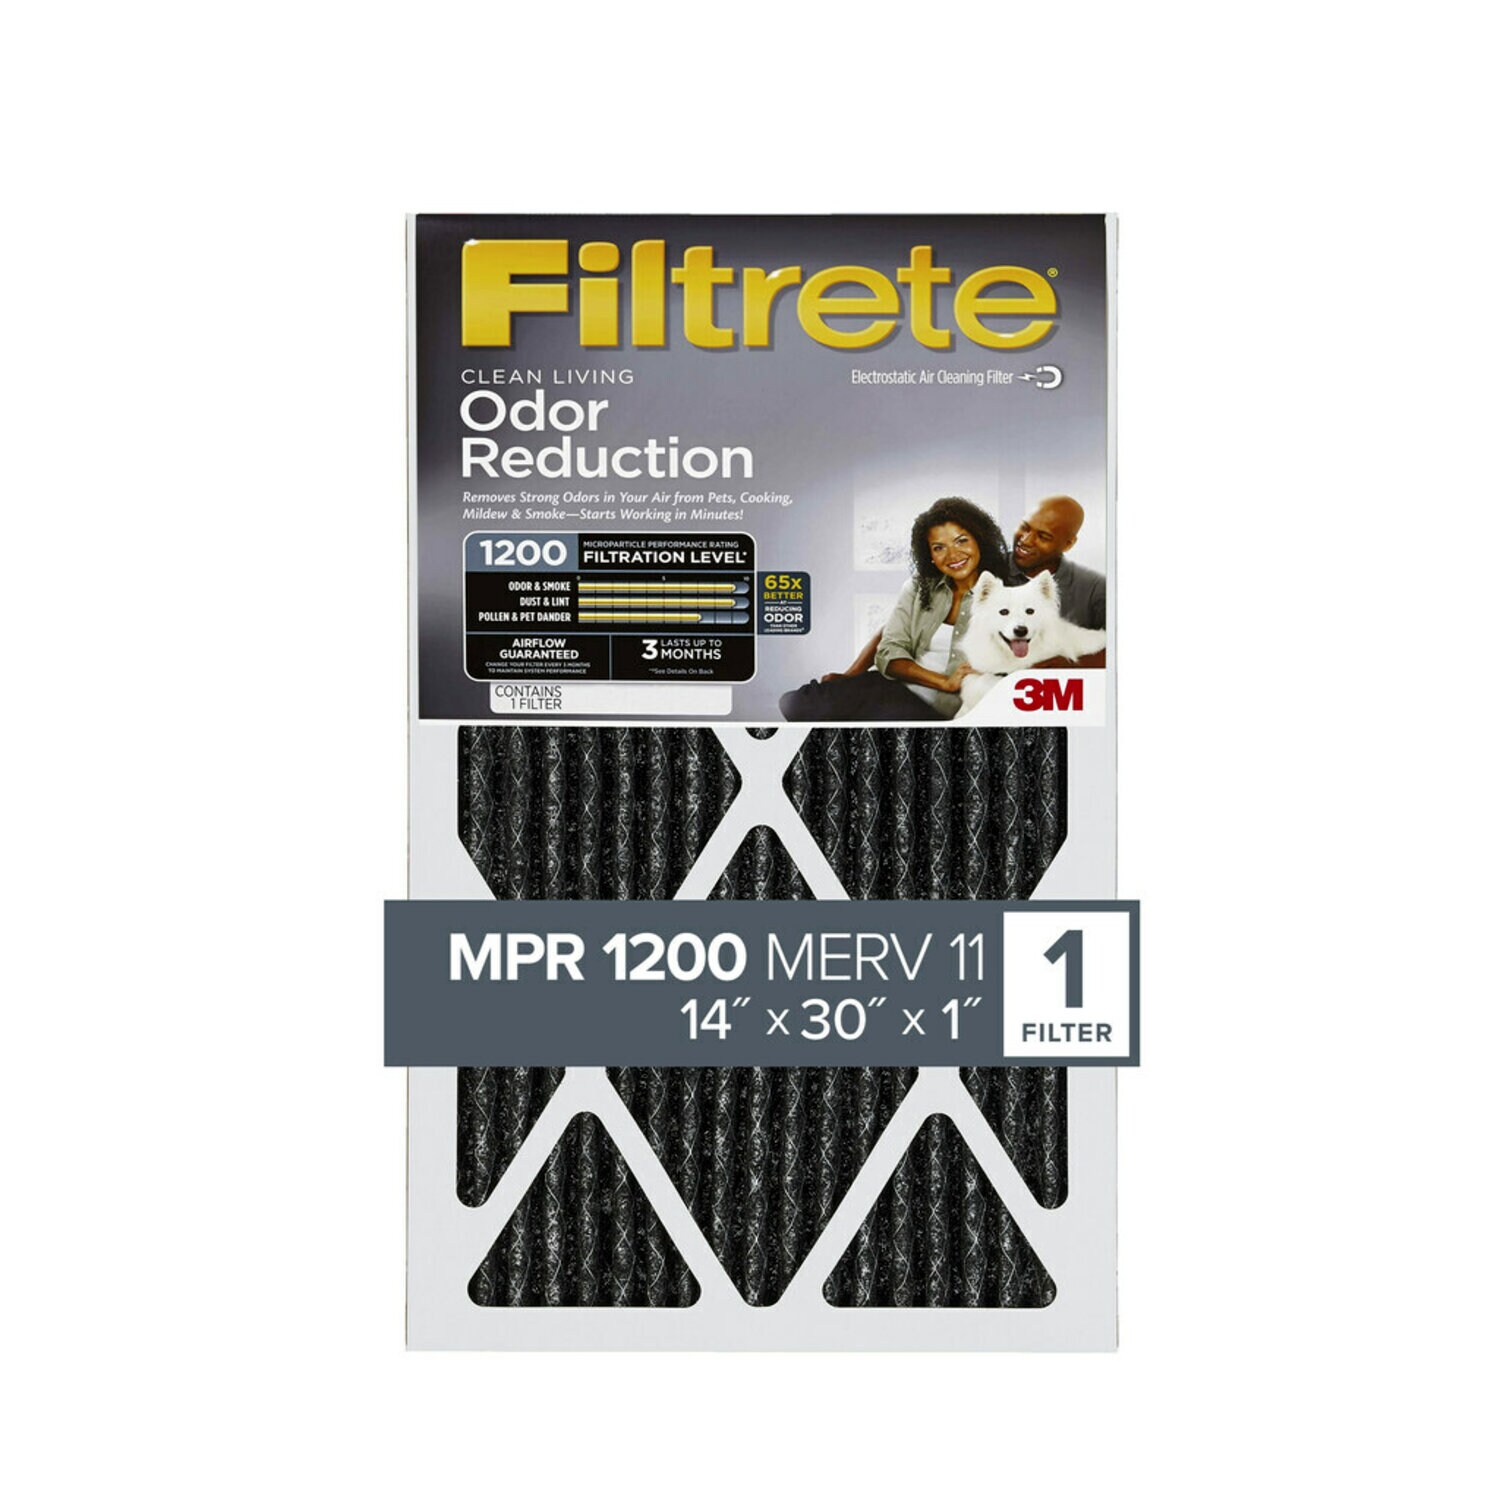 7010335364 - Filtrete Home Odor Reduction Filter HOME24-4, 14 in x 30 in x 1 in
(35.5 cm x 76.2 cm x 2.5 cm)